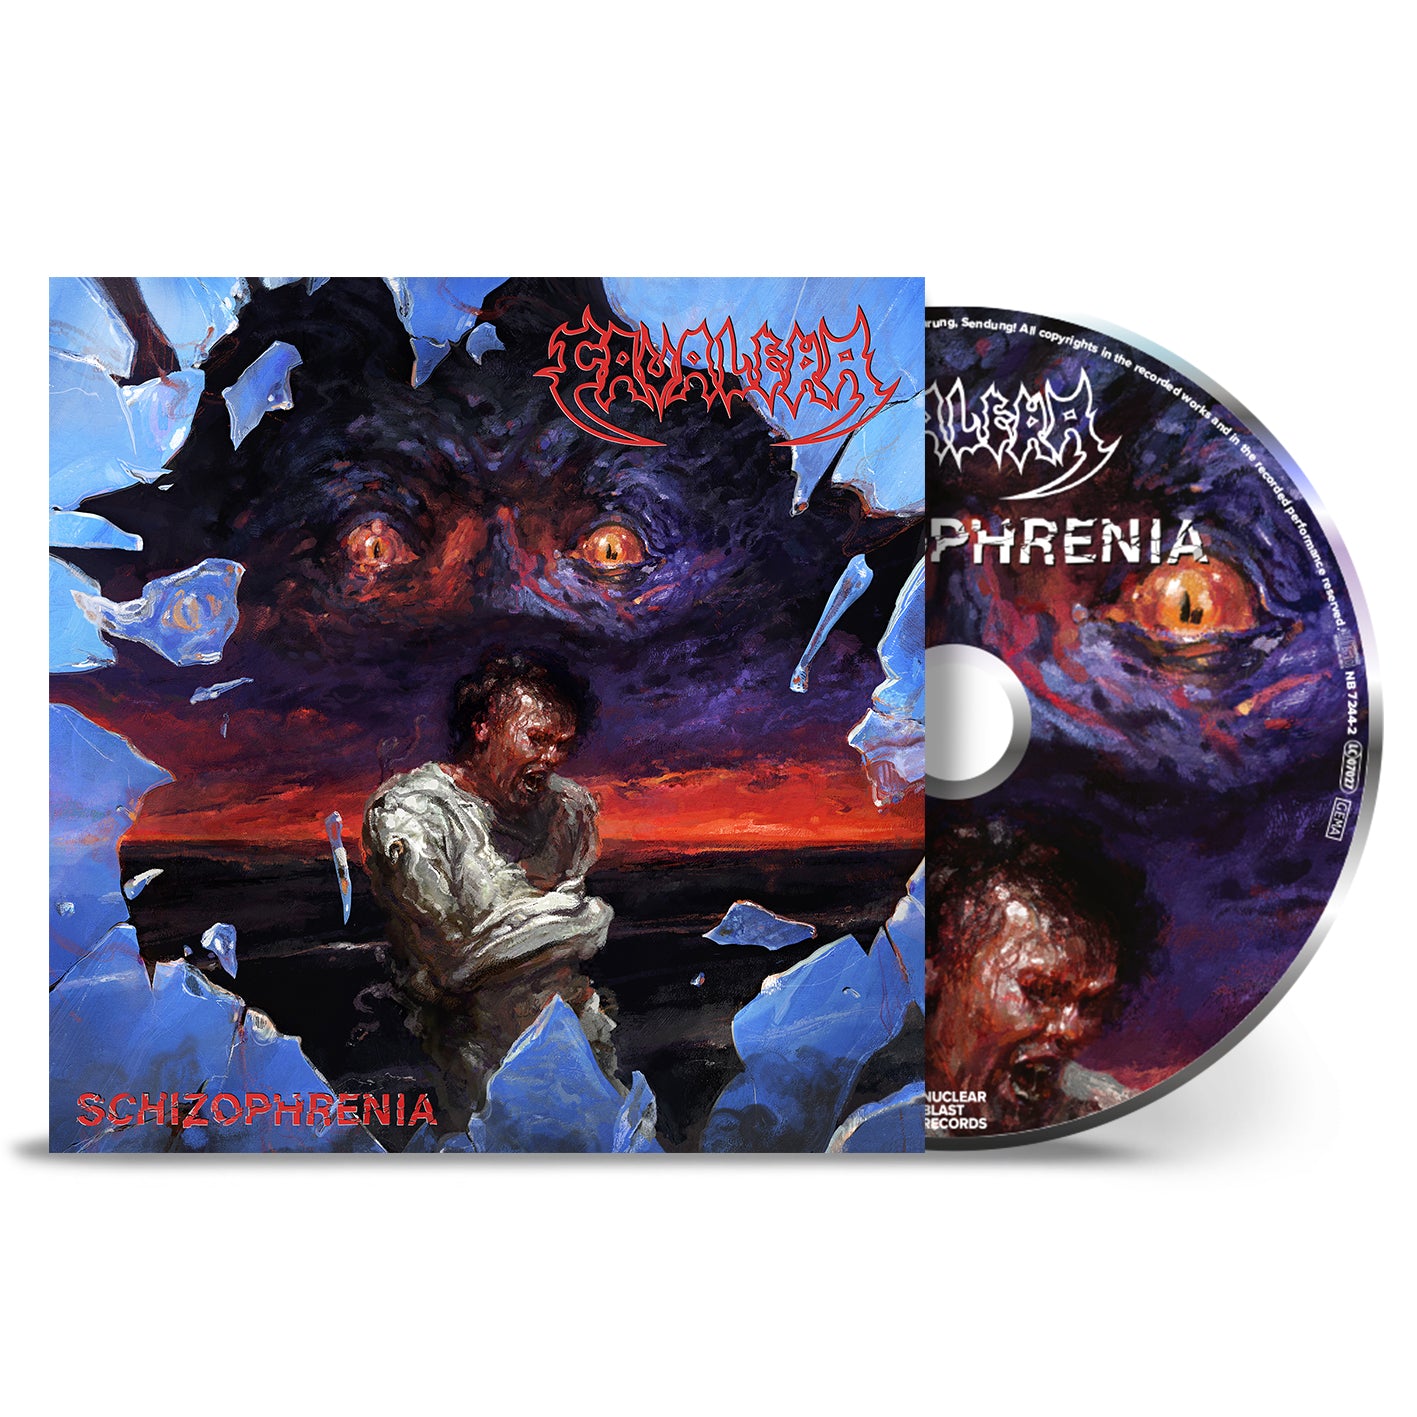 Cavalera "Schizophrenia" CD - PRE-ORDER